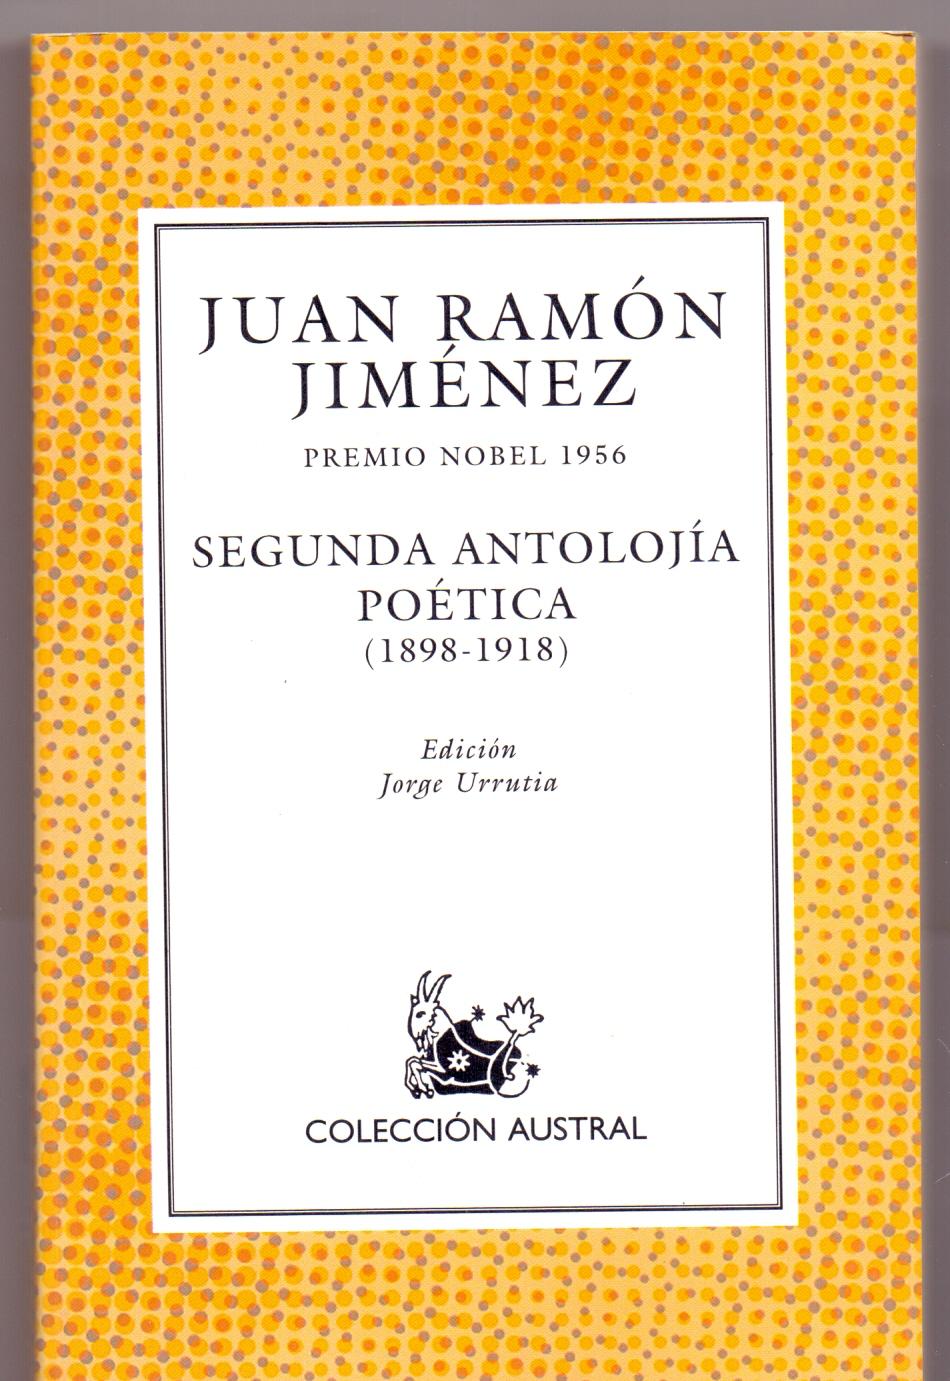 SEGUNDA ANTOLOGIA POETICA (1898-1918) (Coleccion austral num 243) de Juan  Ramon Jimenez (premio nobel 1956) | Libreria 7 Soles